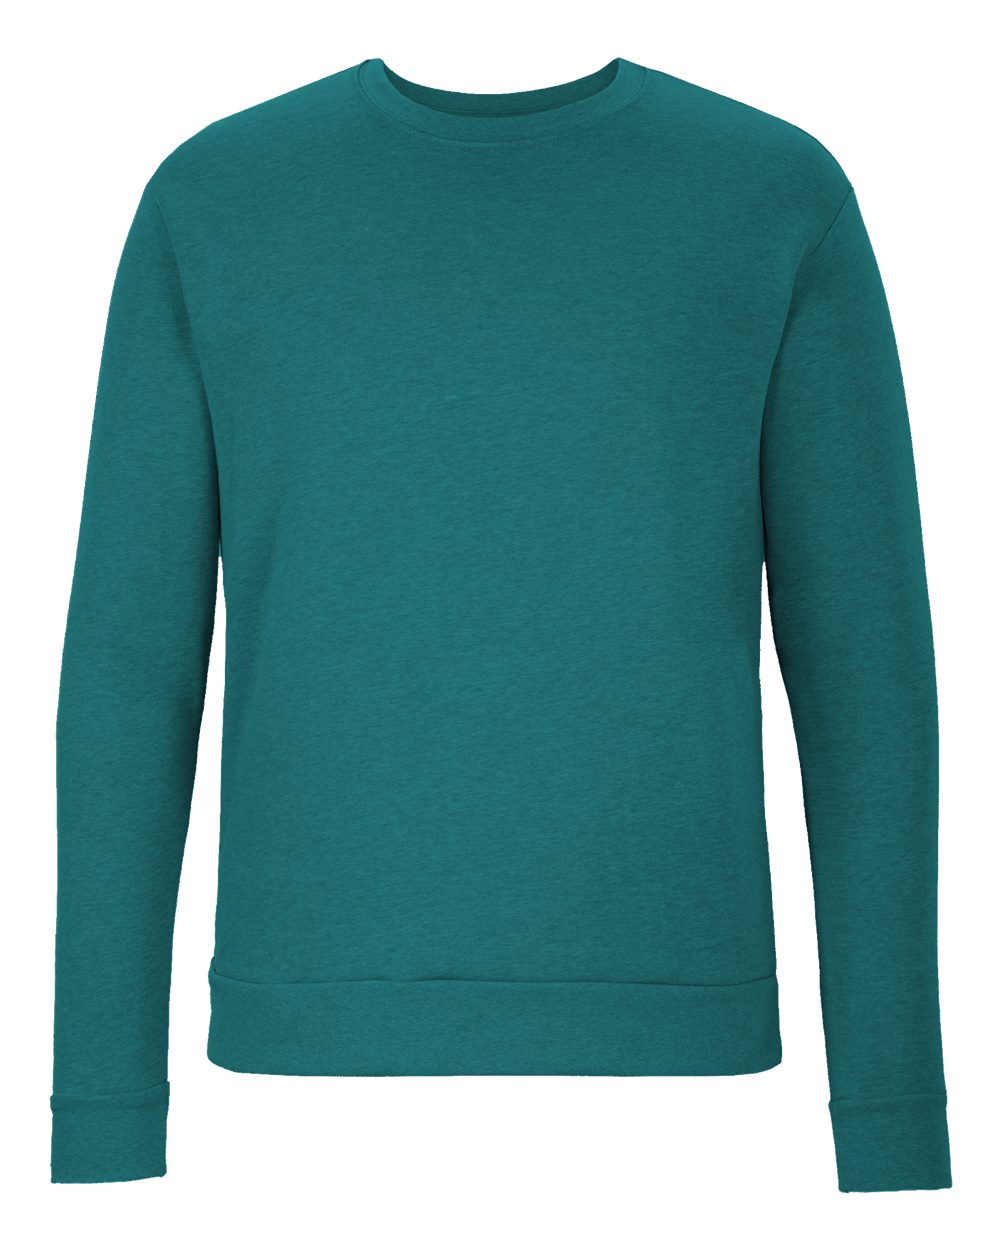 Unisex Best crewneck sweatshirt | 7.4 oz./yd², 60/40 cotton/polyester |  Affordable & High-quality Durable pullover | Enjoy Comfortable & Trendy